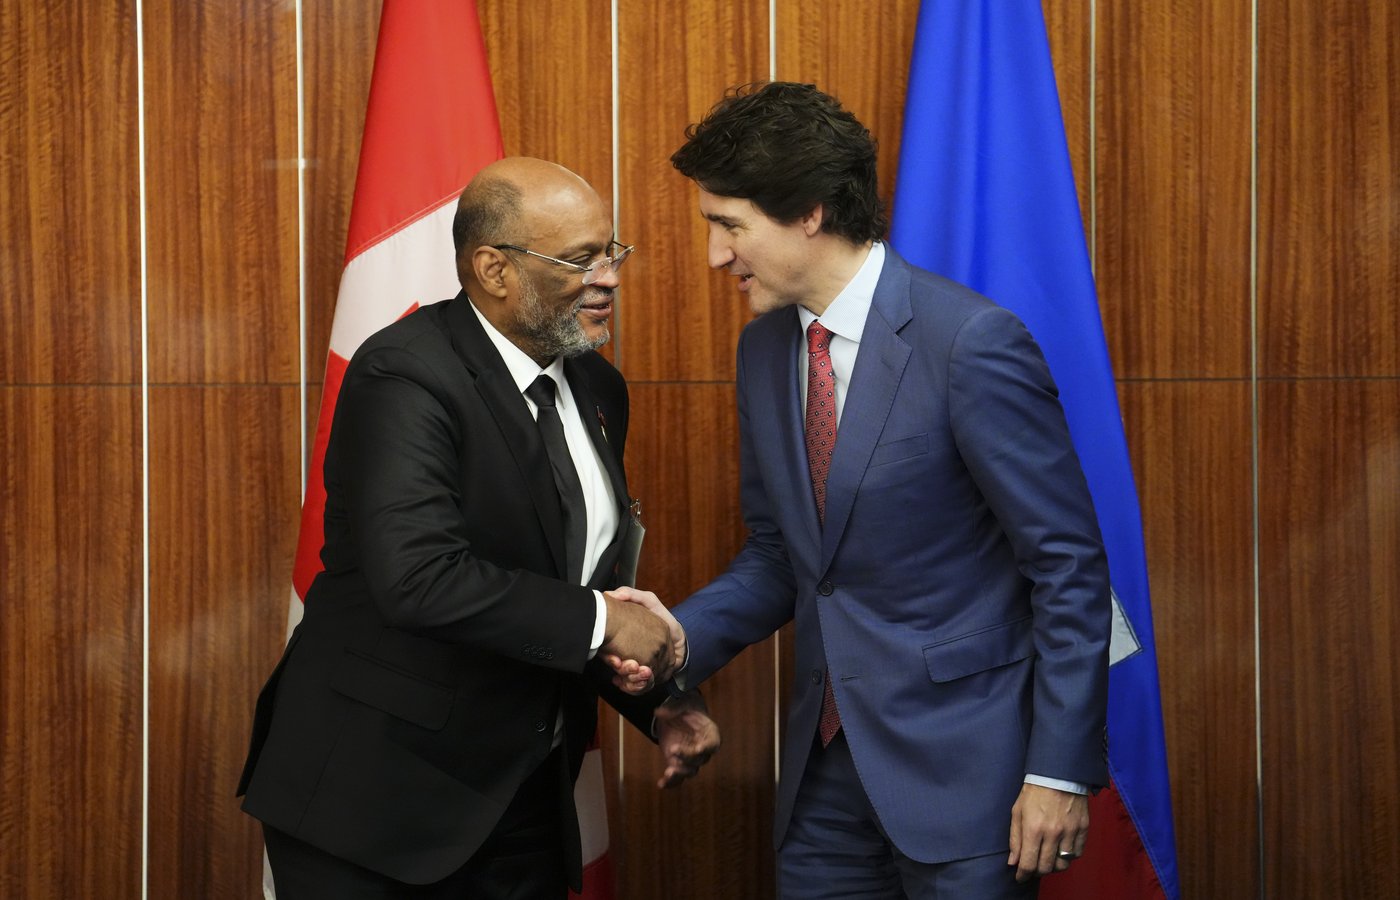 Trudeau pledges more help for Haiti